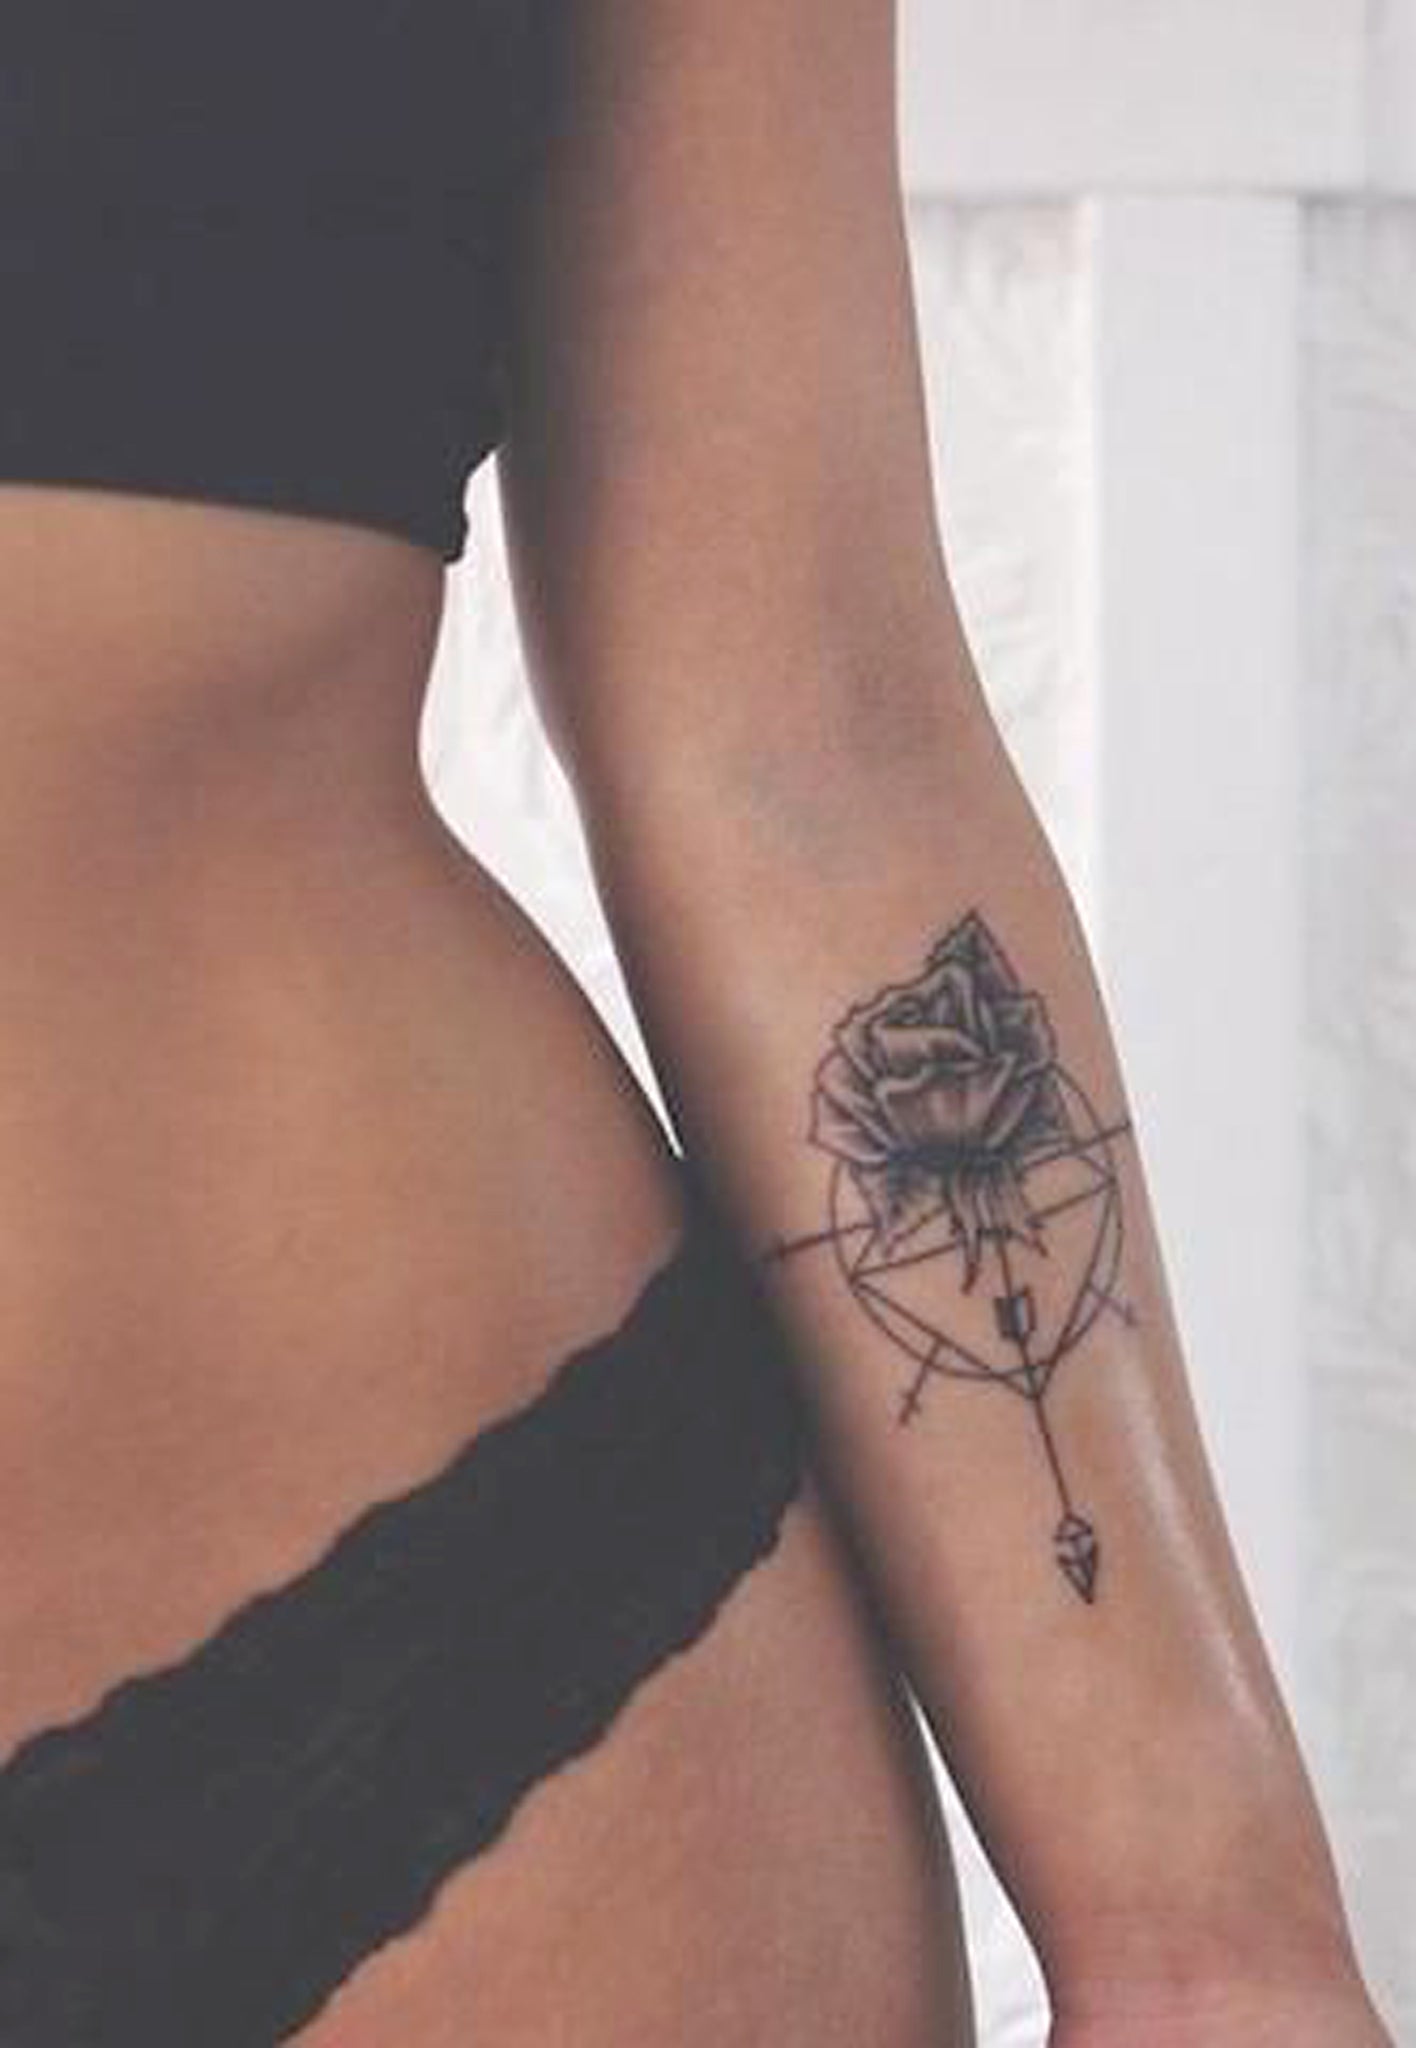 Rose Inner Forearm Tattoo Ideas for Teenagers - Floral Flower Arm Tat for Women - Ideas del tatuaje del antebrazo de Rose para los adolescentes  - www.MyBodiArt.com